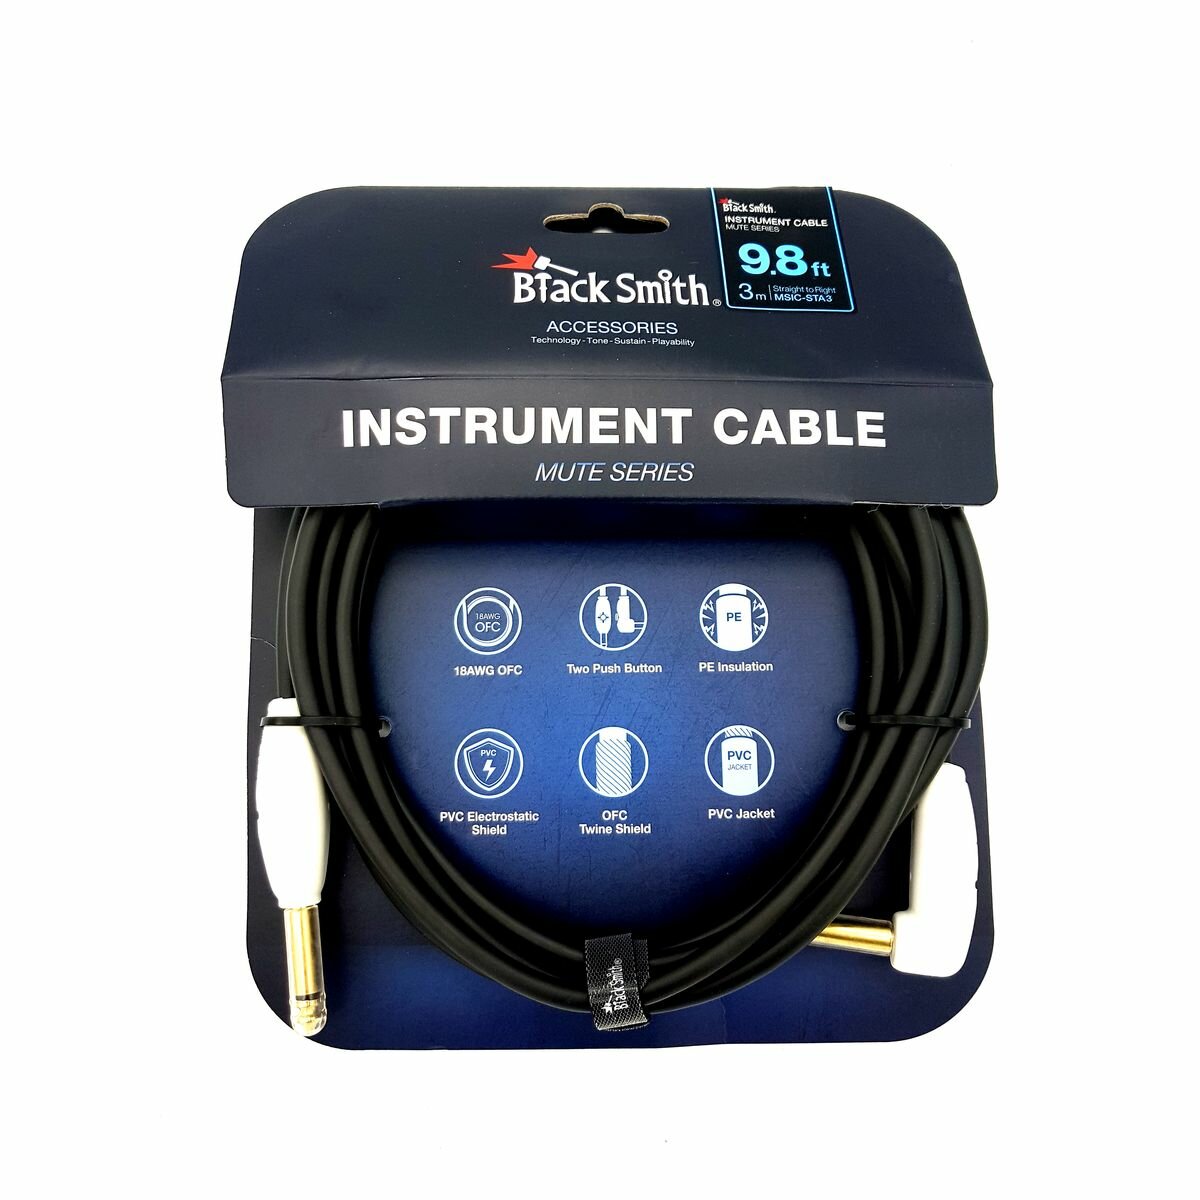 BlackSmith Instrument Cable Mute Series 9.8ft MSIC-STA3 инструментальный кабель 3 метра прямой Jack + угловой Jack mut